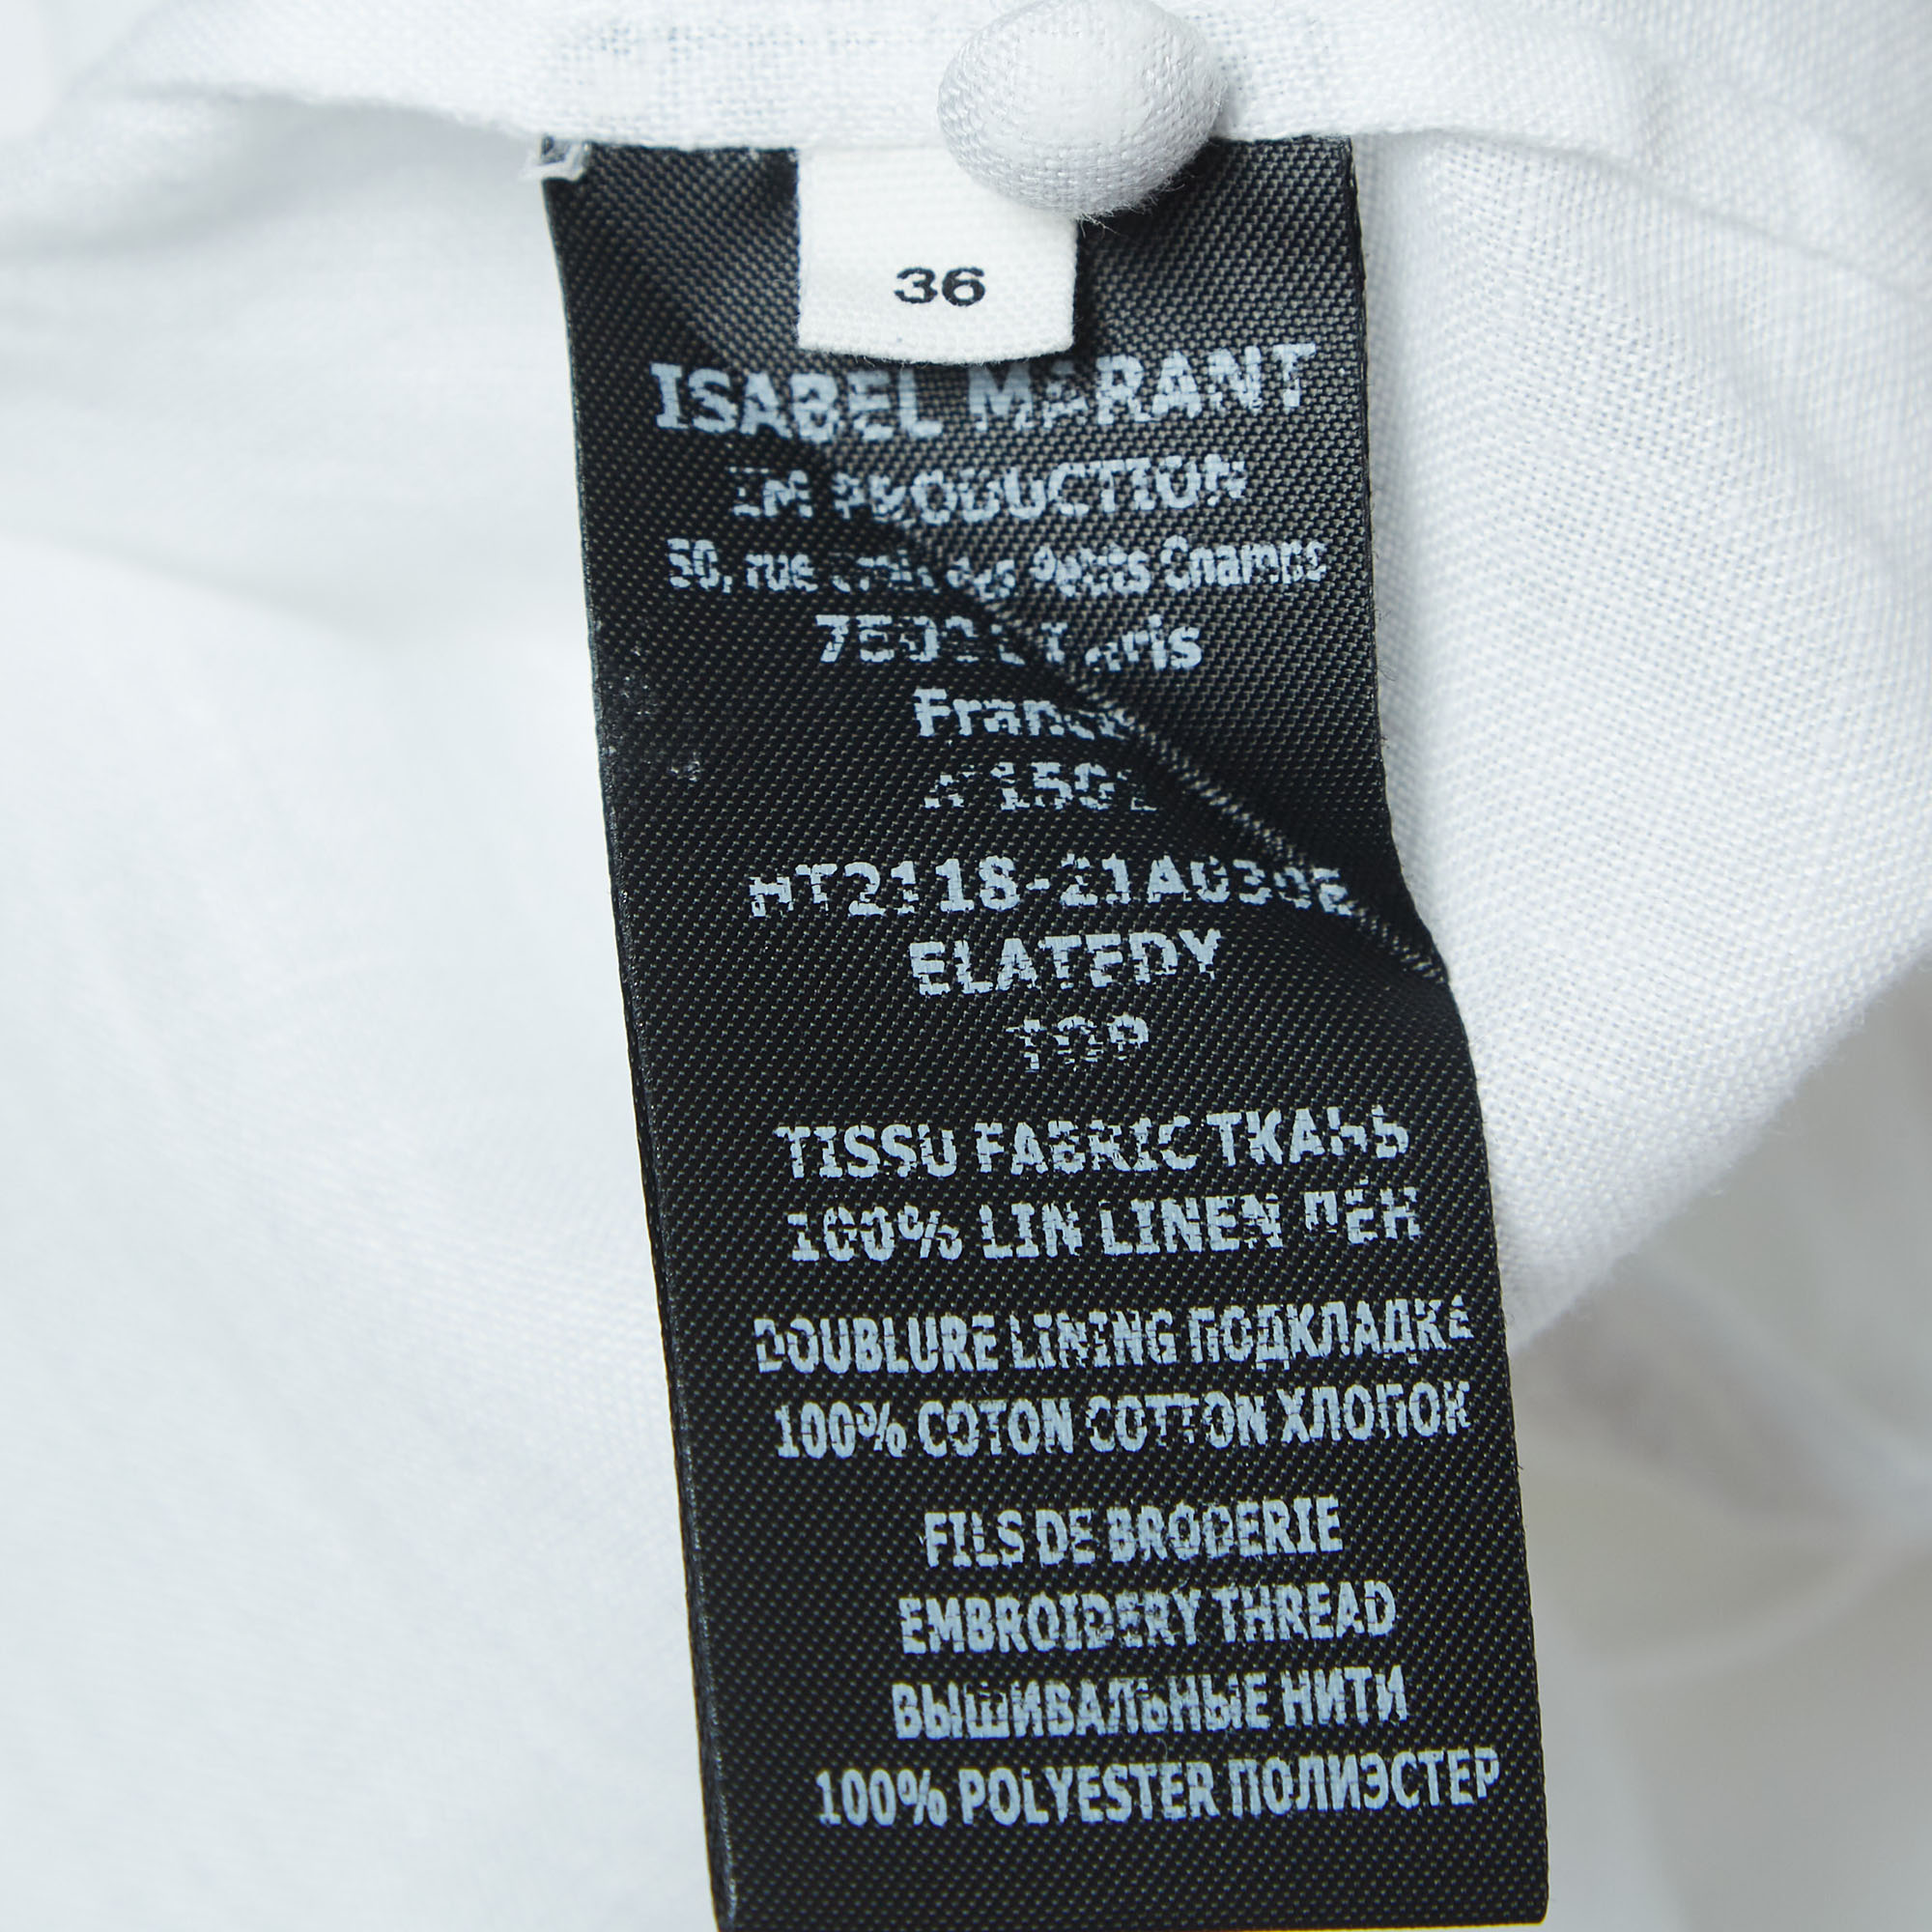 Isabel Marant Etoile White Linen Ruffled Button Front Blouse XS